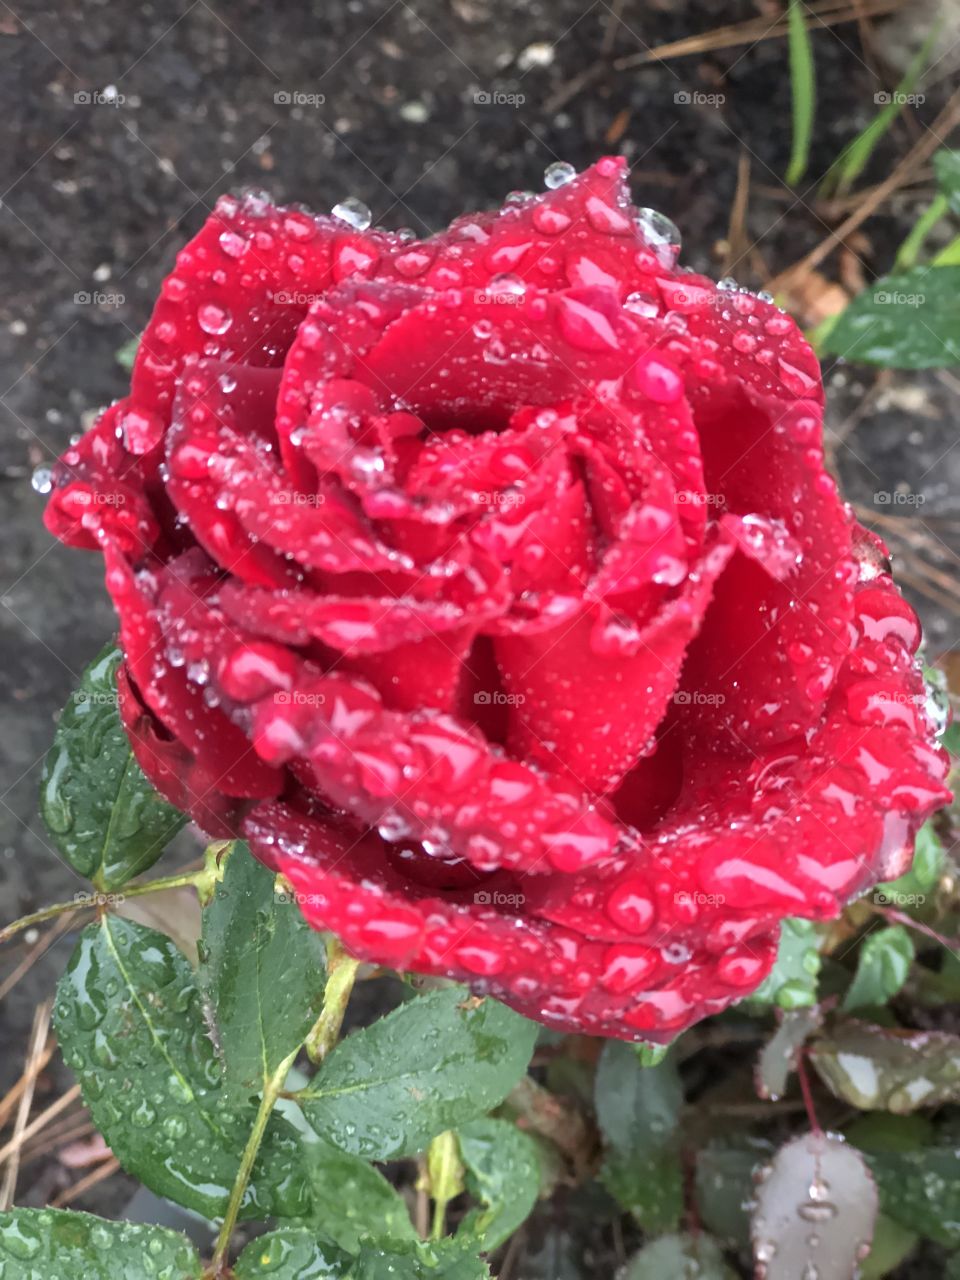 Raindrops on roses...